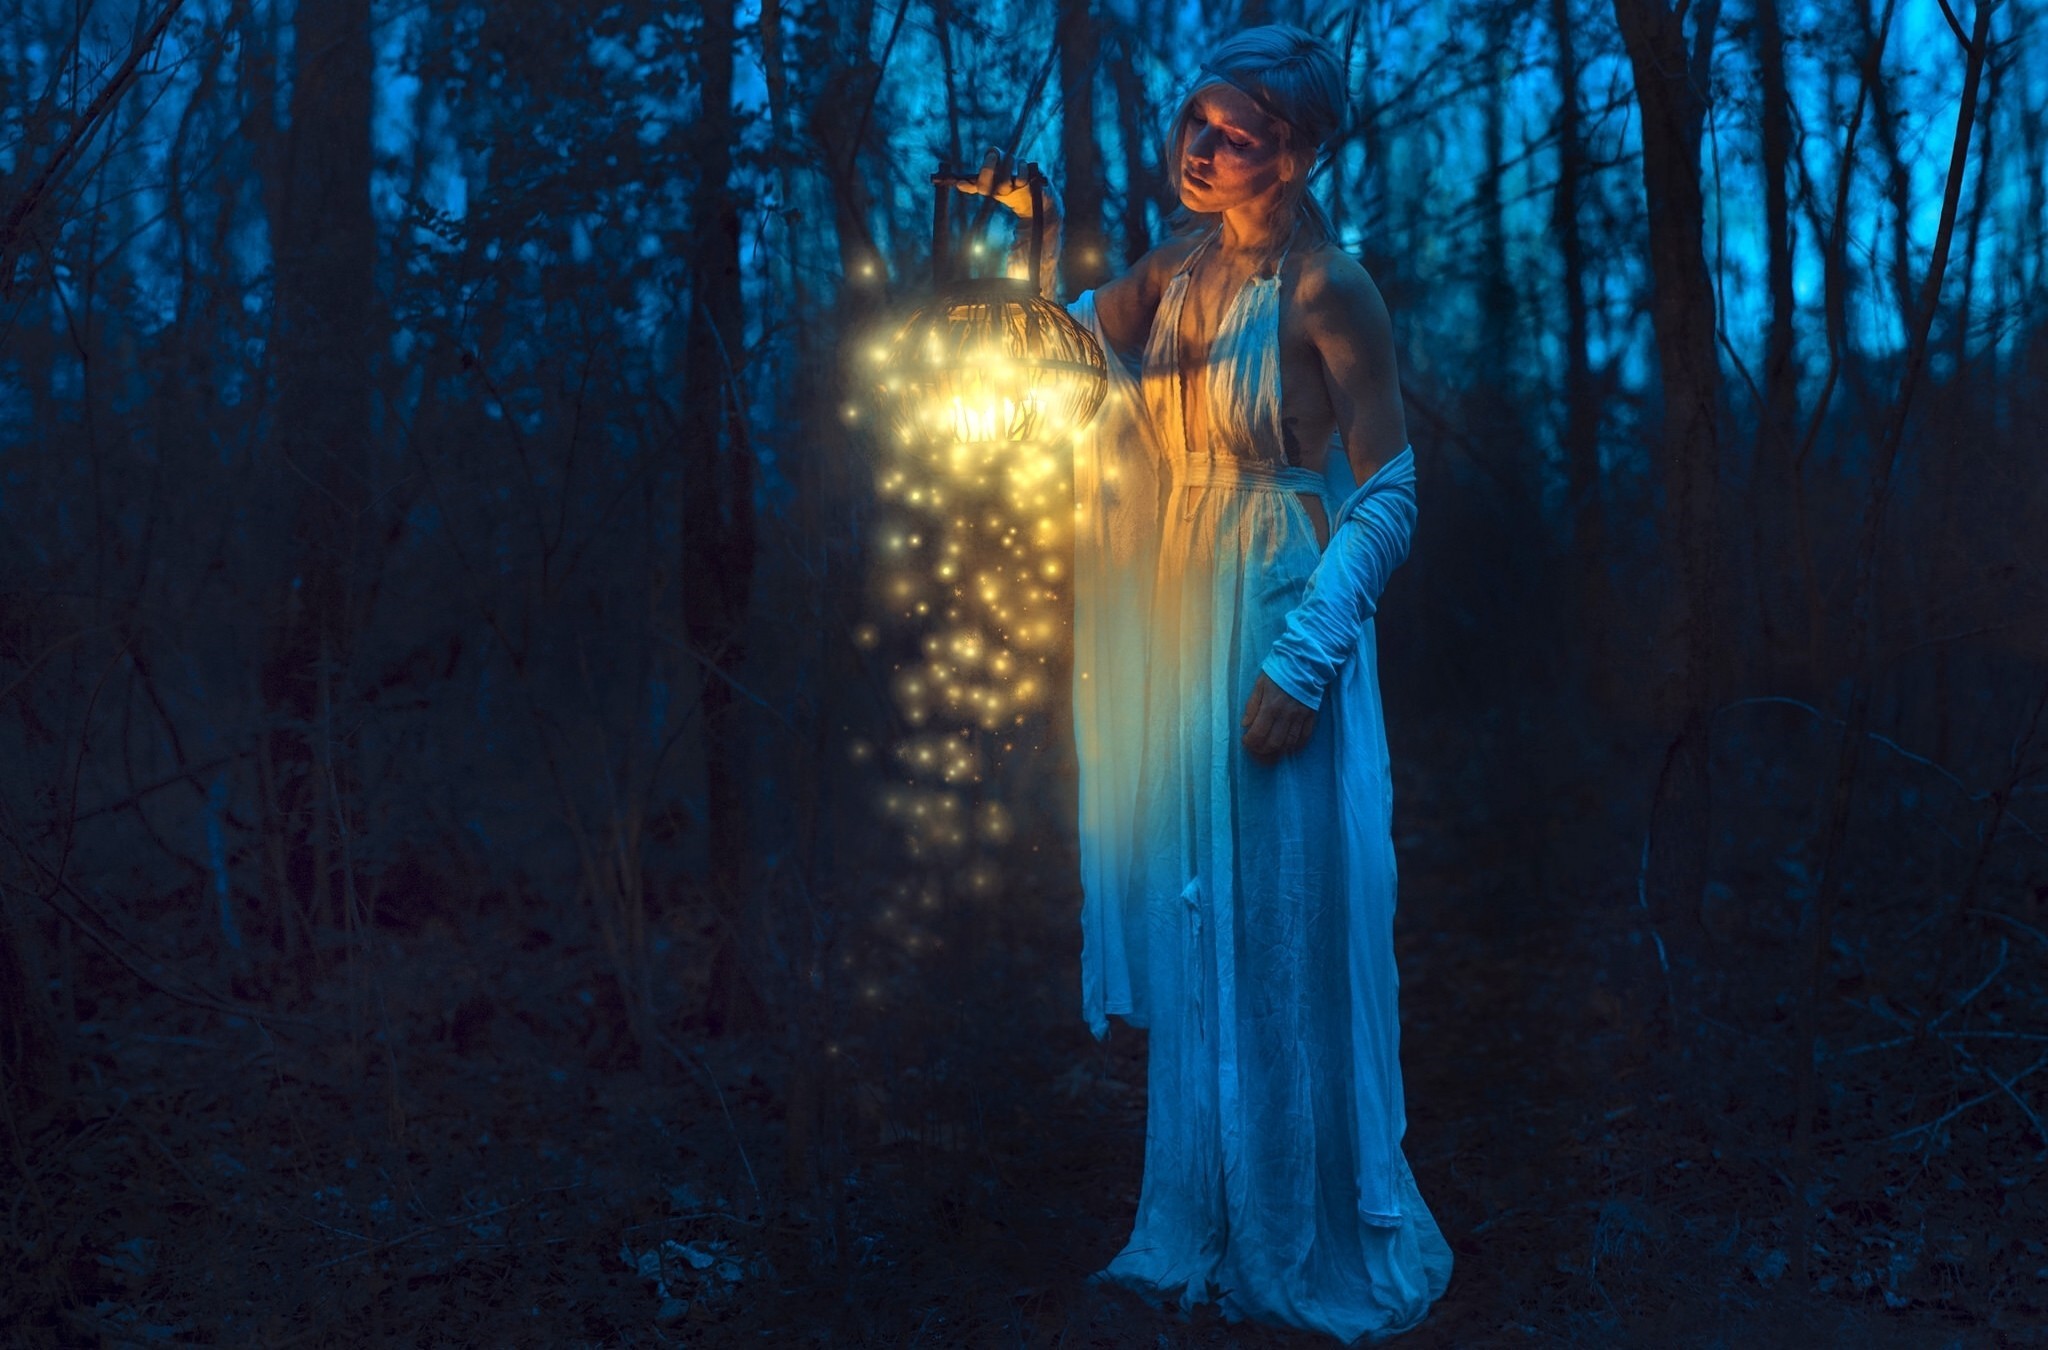 People 2048x1350 lantern fantasy art women outdoors women night trees dress white dress dark digital art